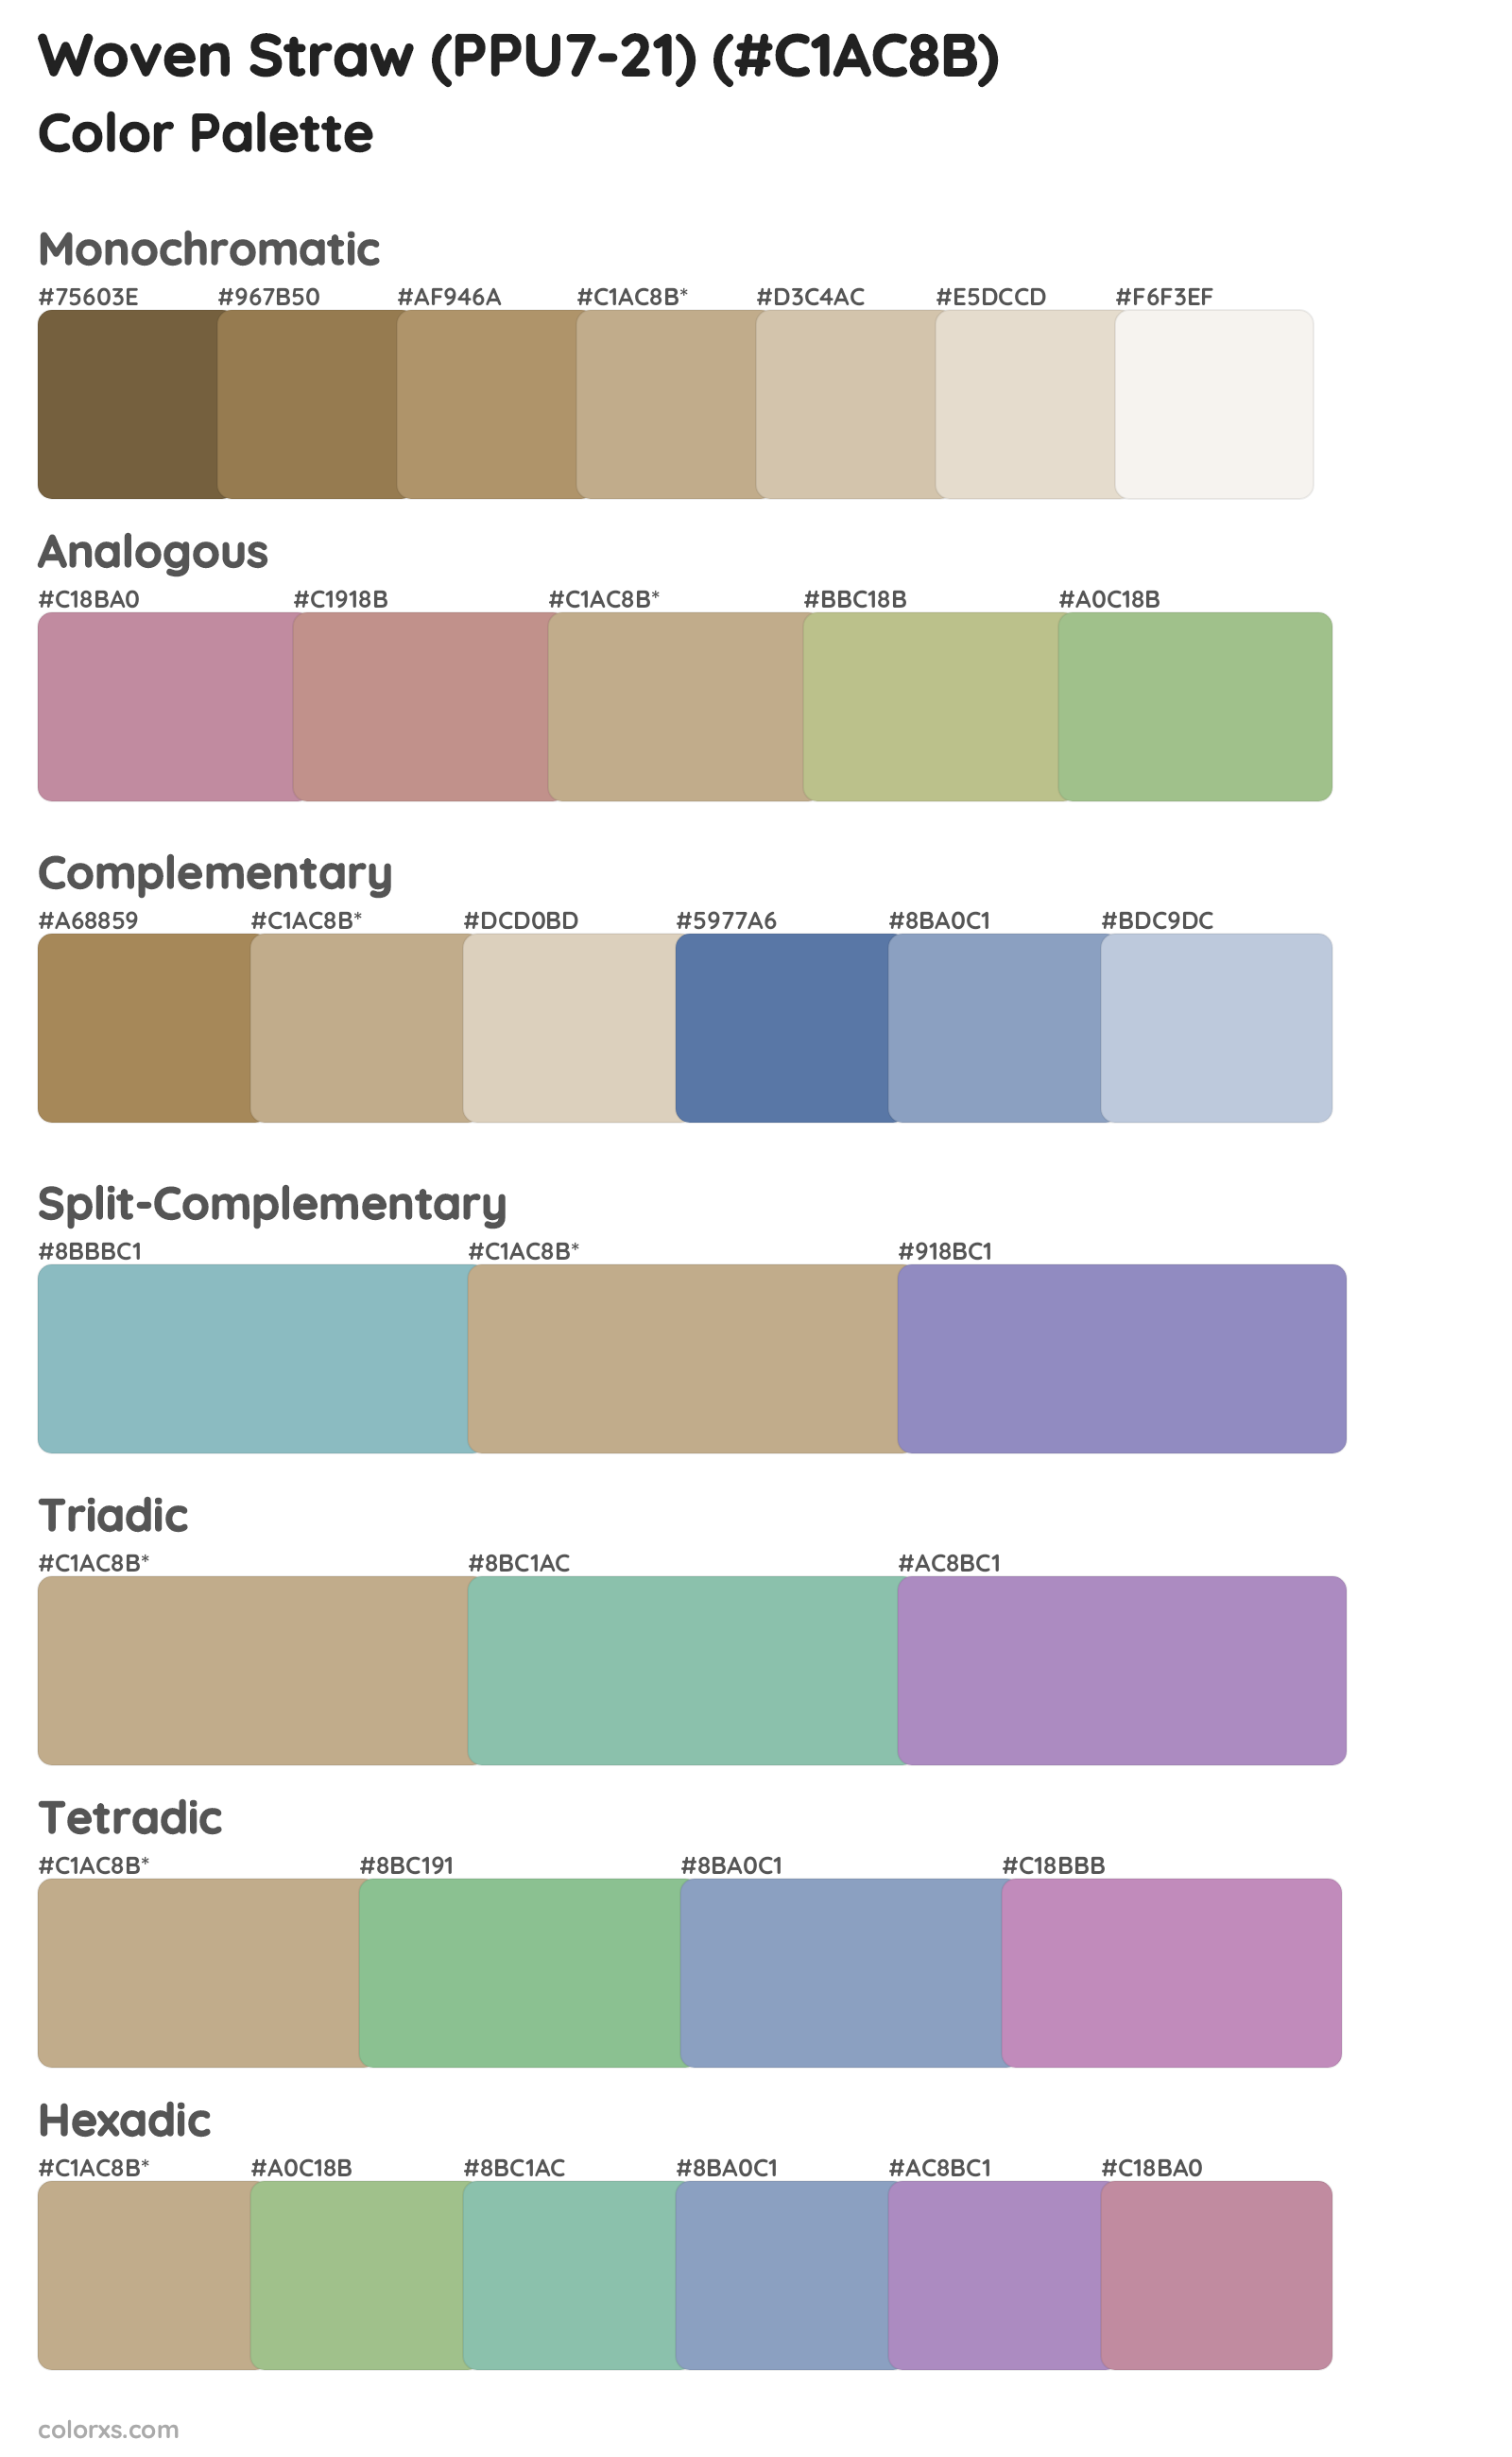 Woven Straw (PPU7-21) Color Scheme Palettes